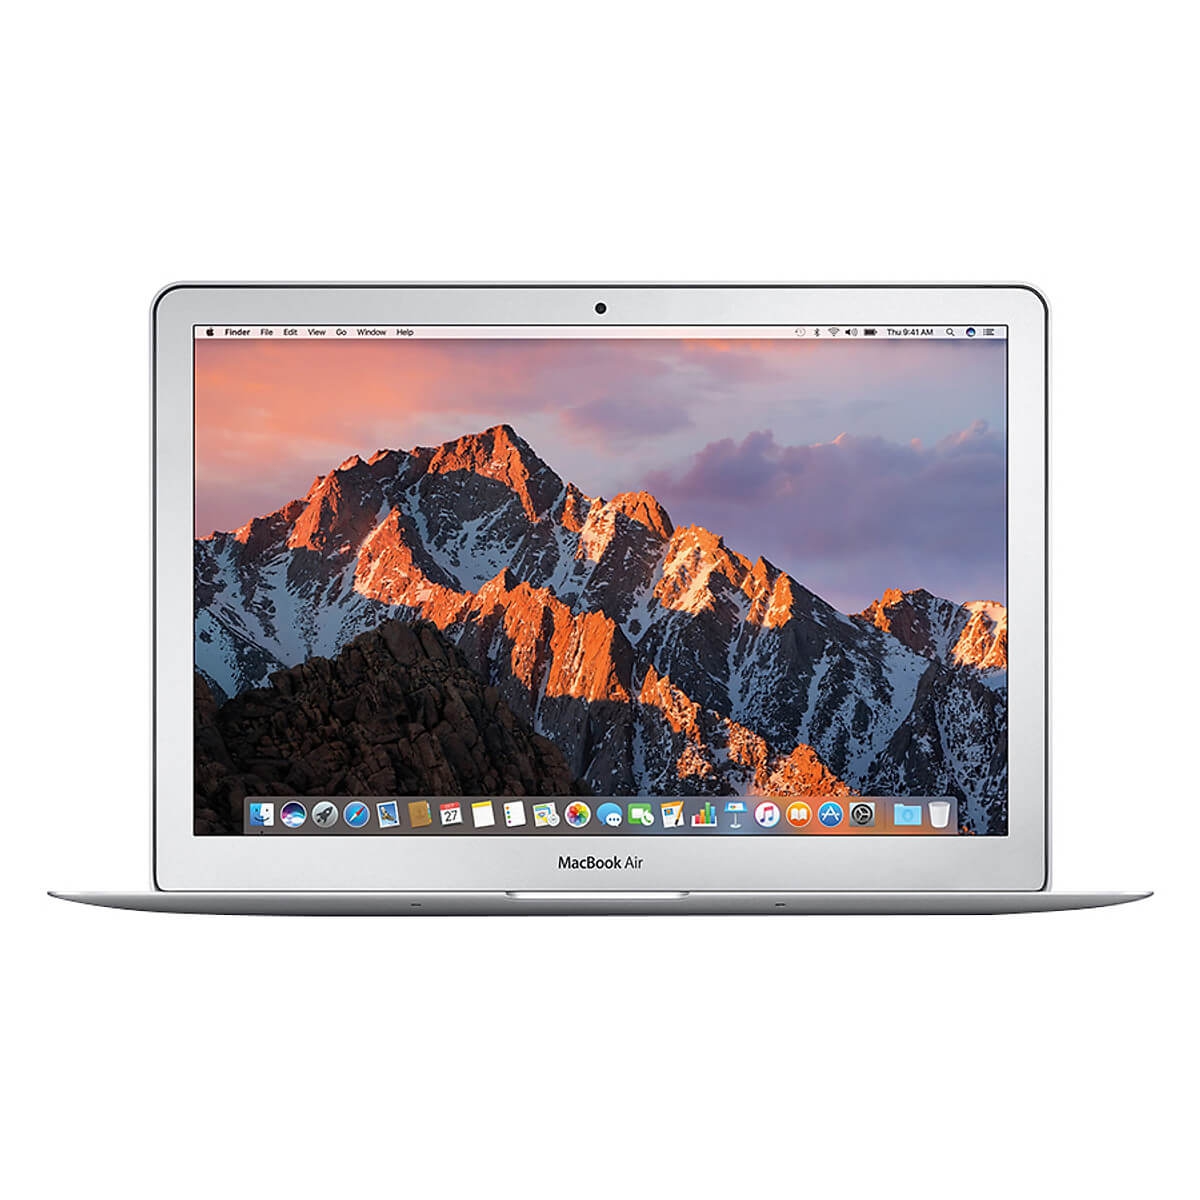 Apple MacBook Air 2017 Intel - 13 inchs (Intel i5/8GB/128GB) - New Seal